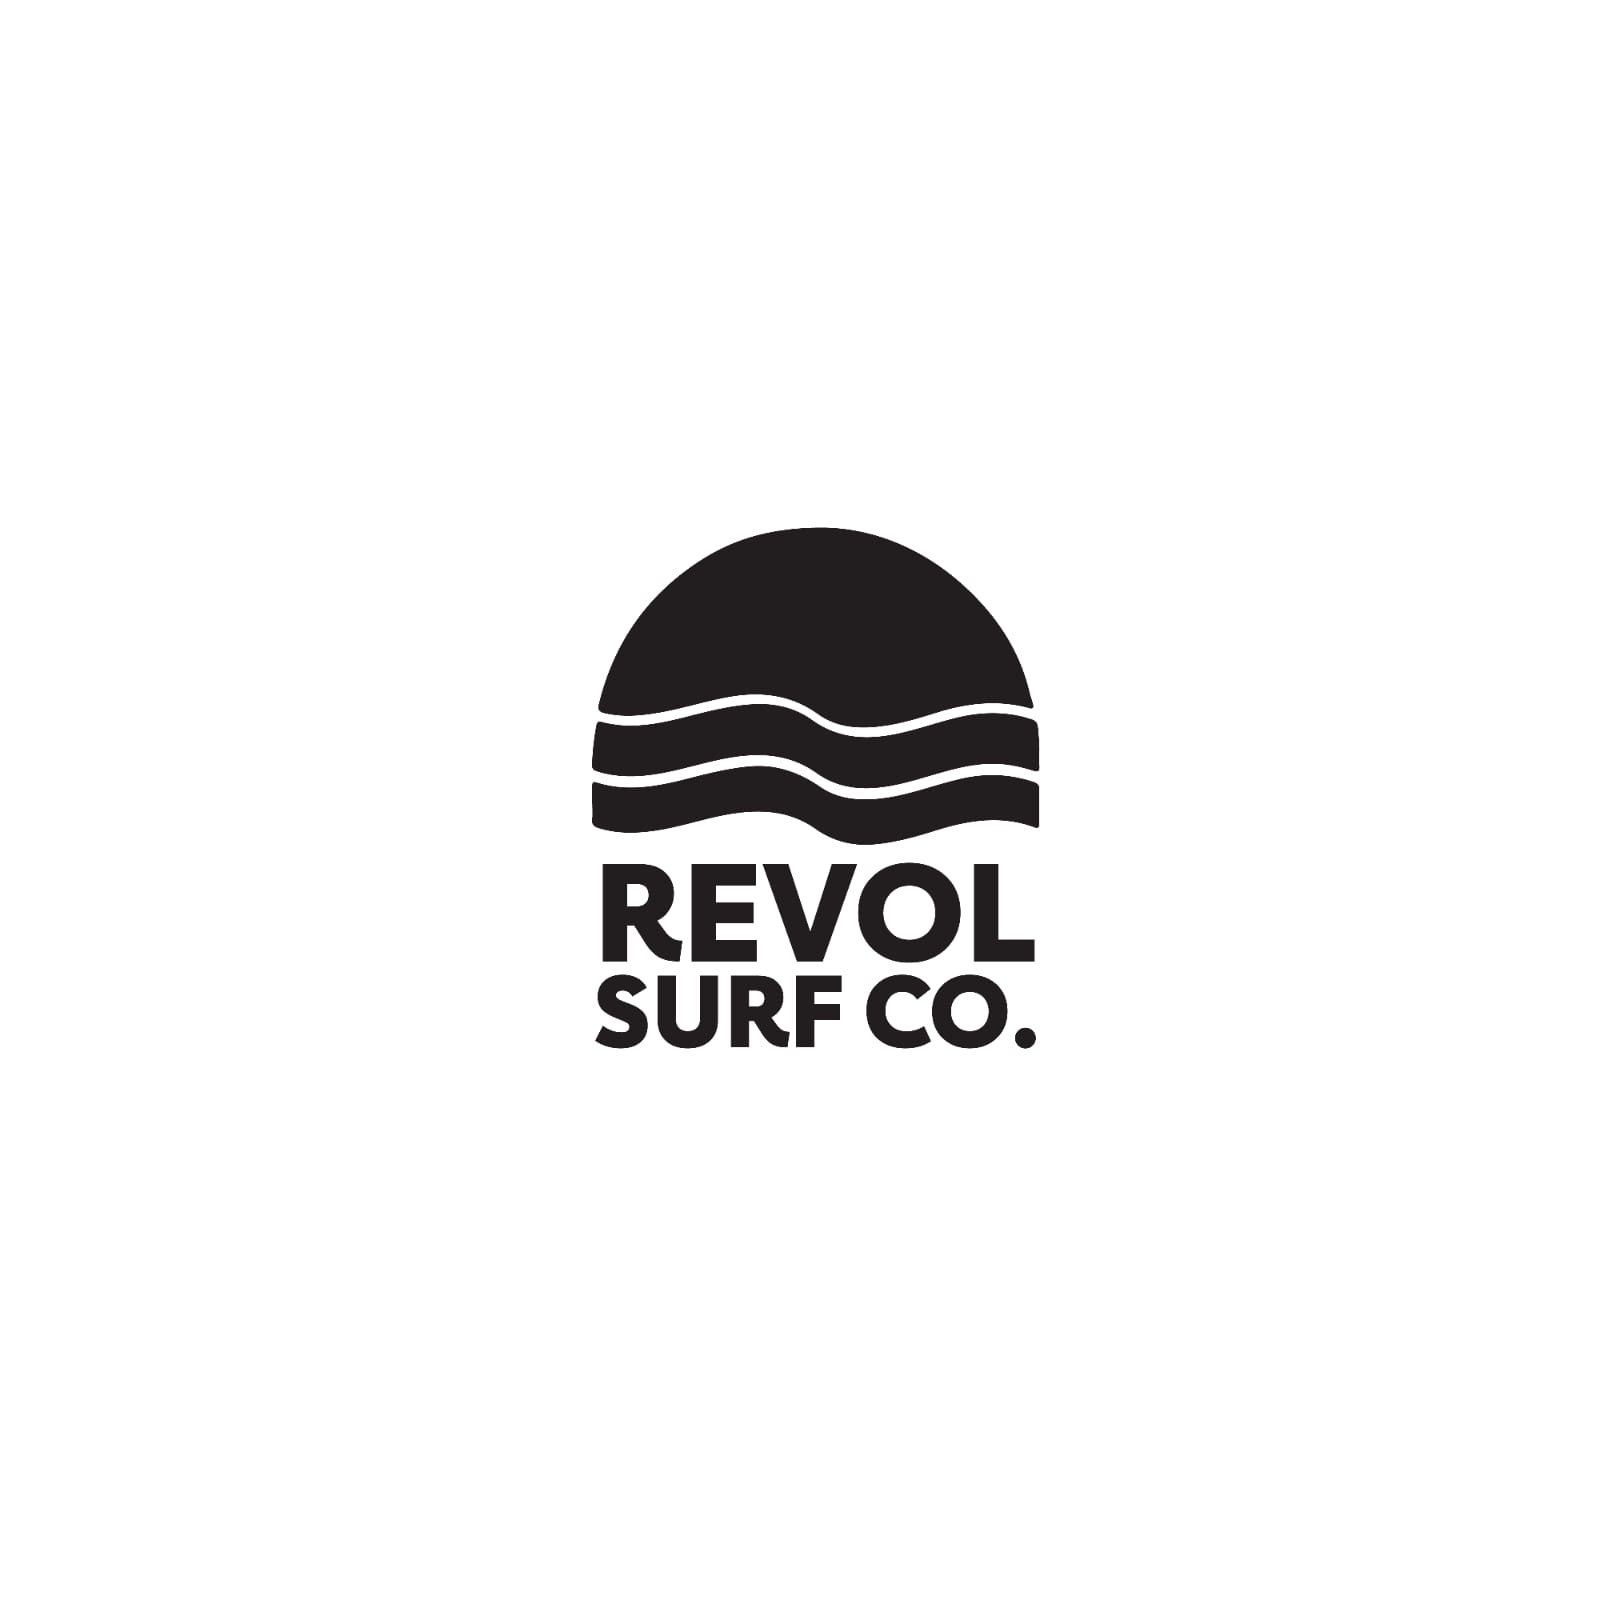                                                                                REVOL SURF CO